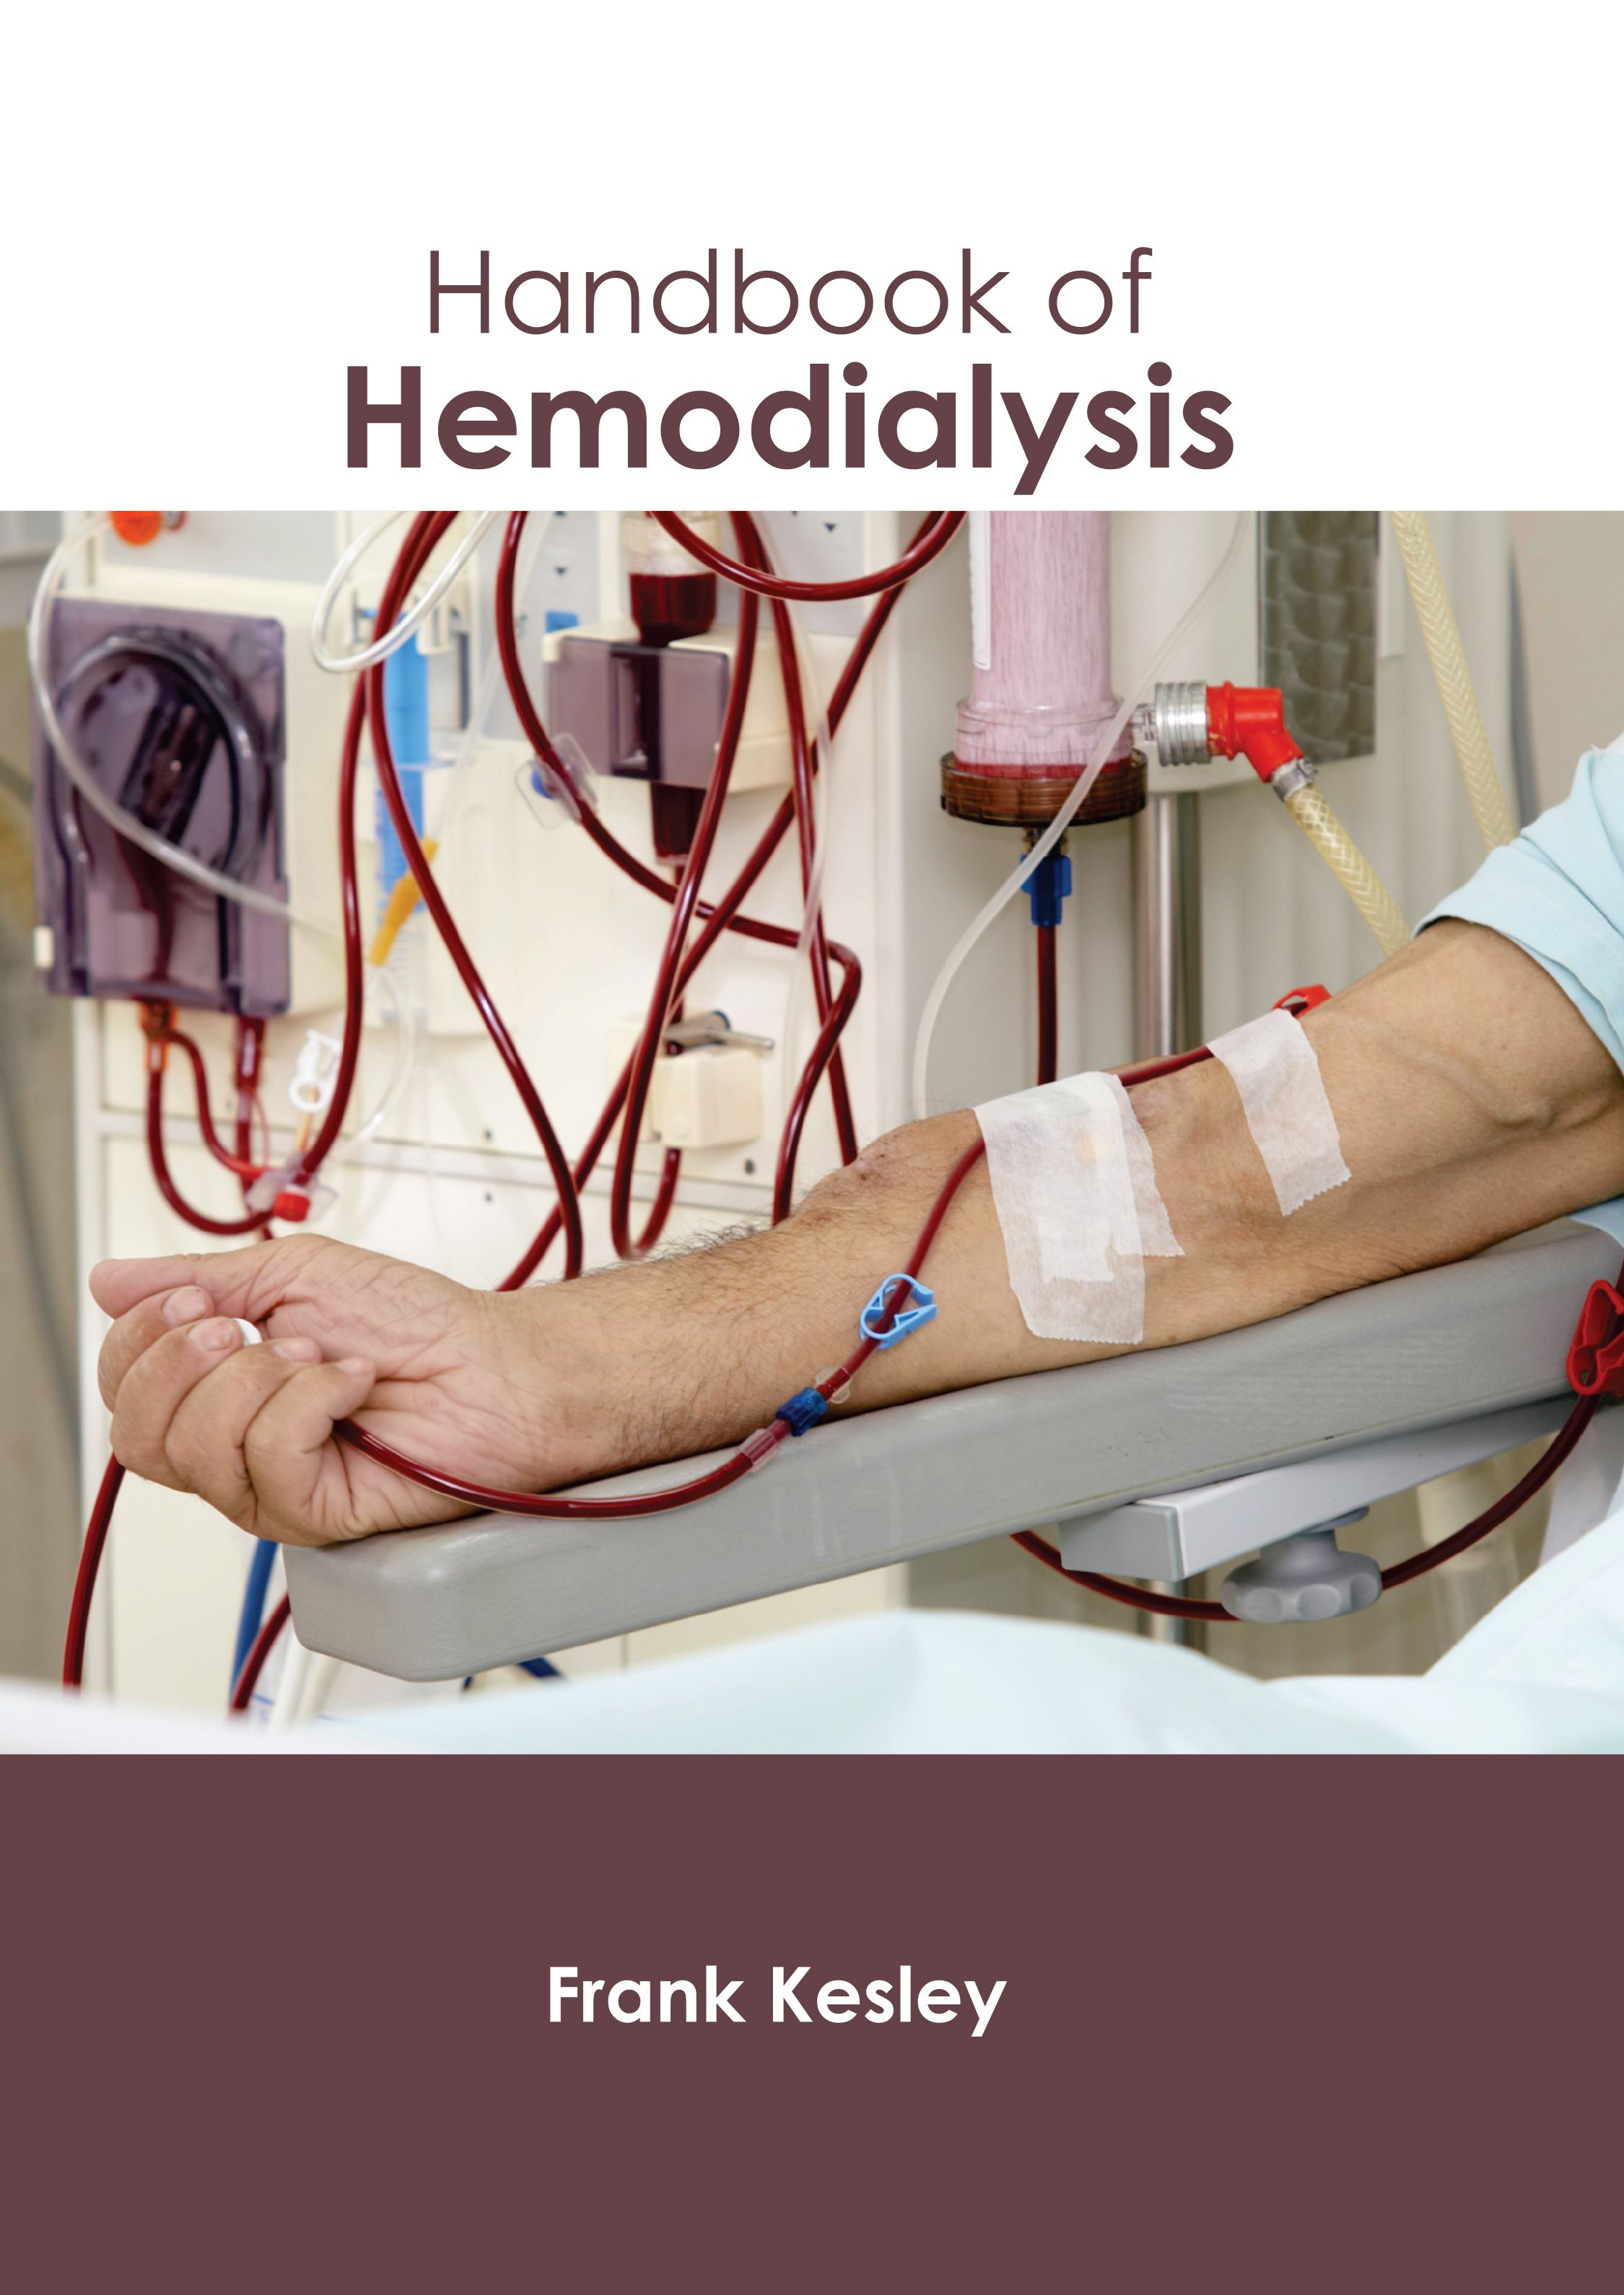 

medical-reference-books/nephrology/handbook-of-hemodialysis-9798887401461